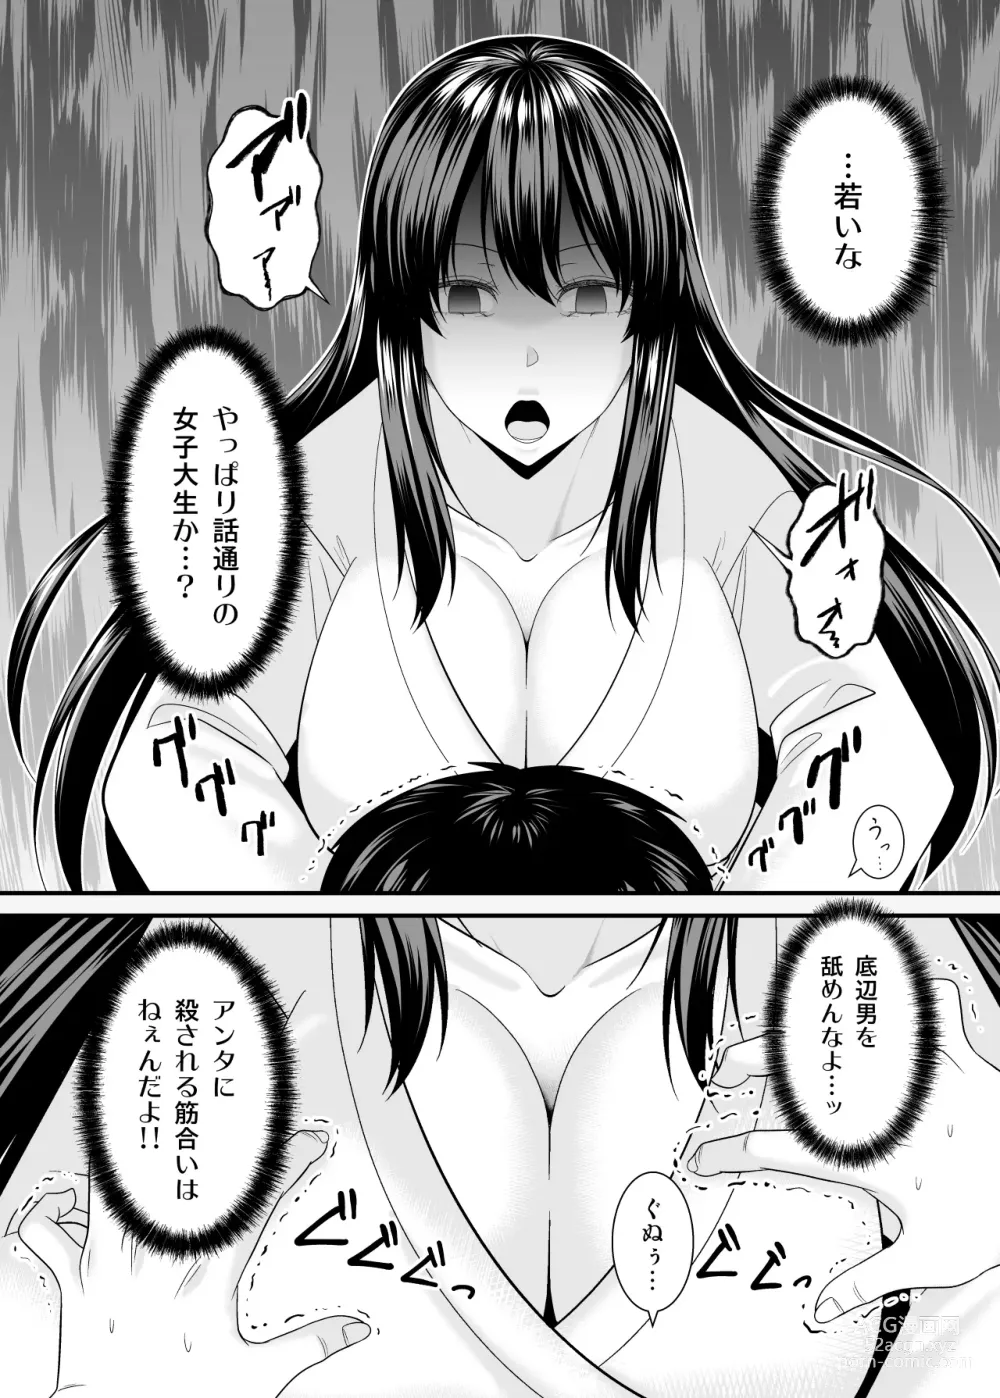 Page 15 of doujinshi ヤバい事故物件に女幽霊が出たけど無職底辺の俺はセックスしまくる